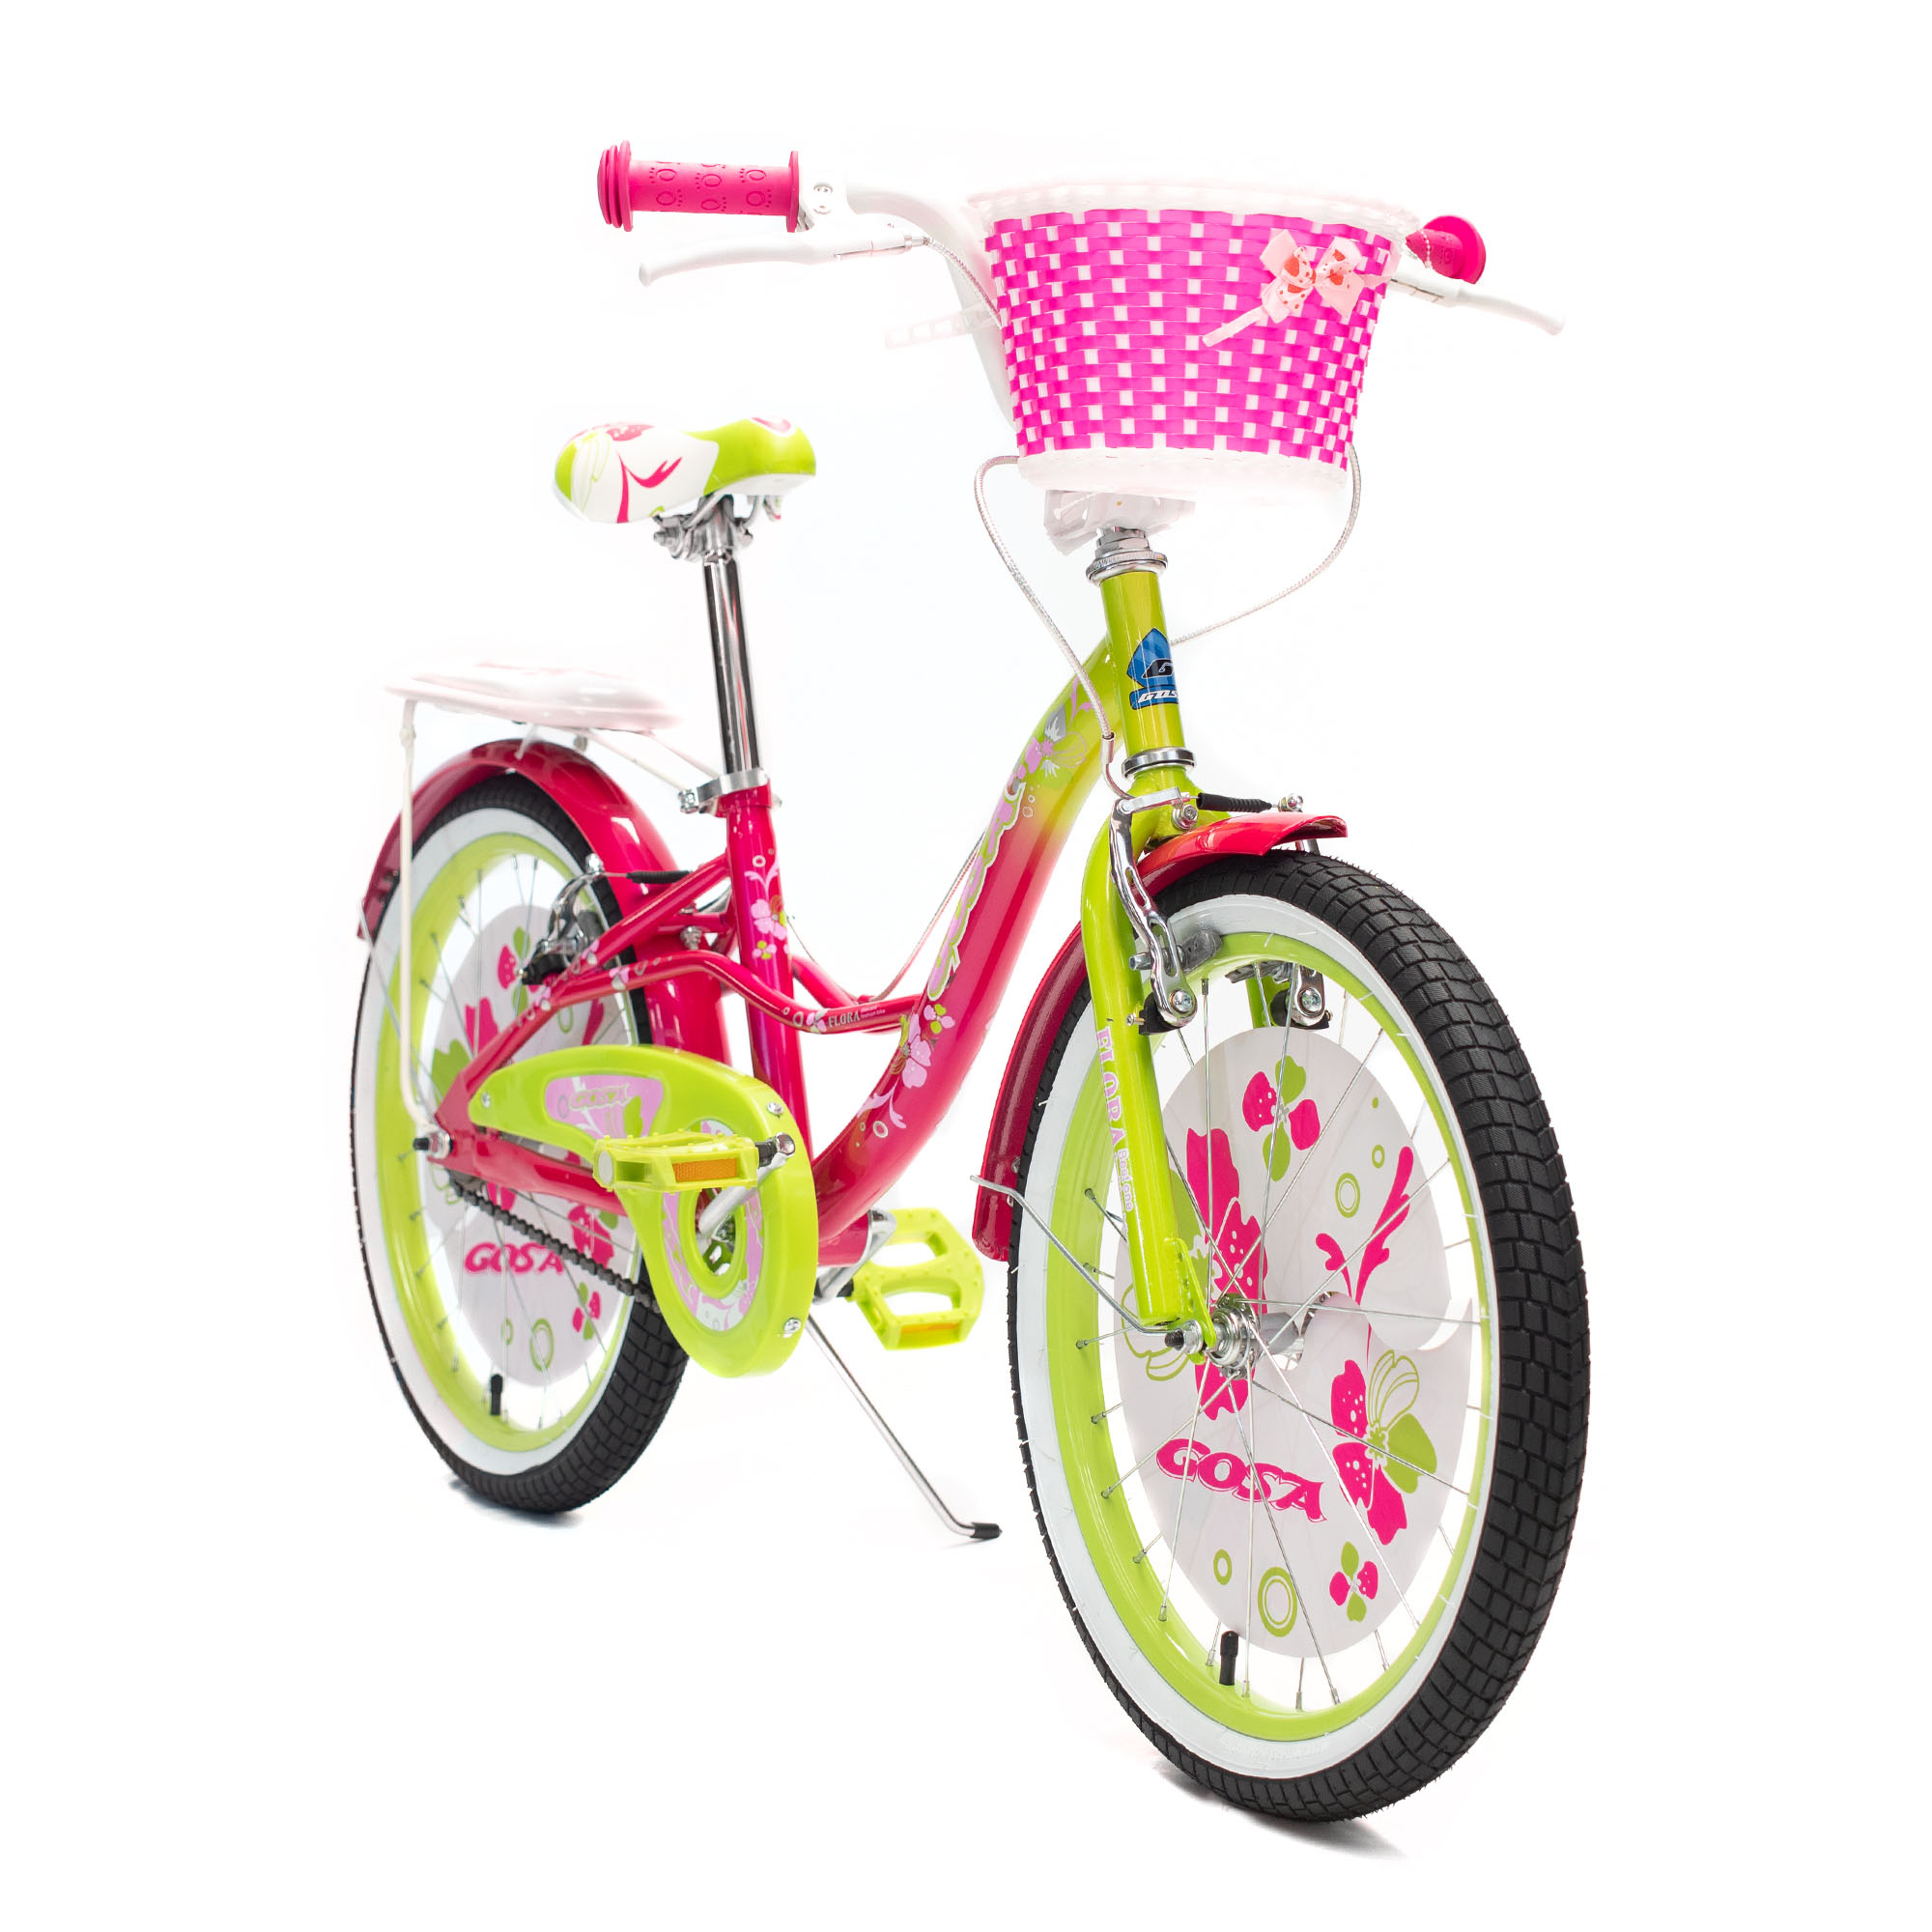 Bicicleta infantil 20 pulgadas niño 1 velocidad